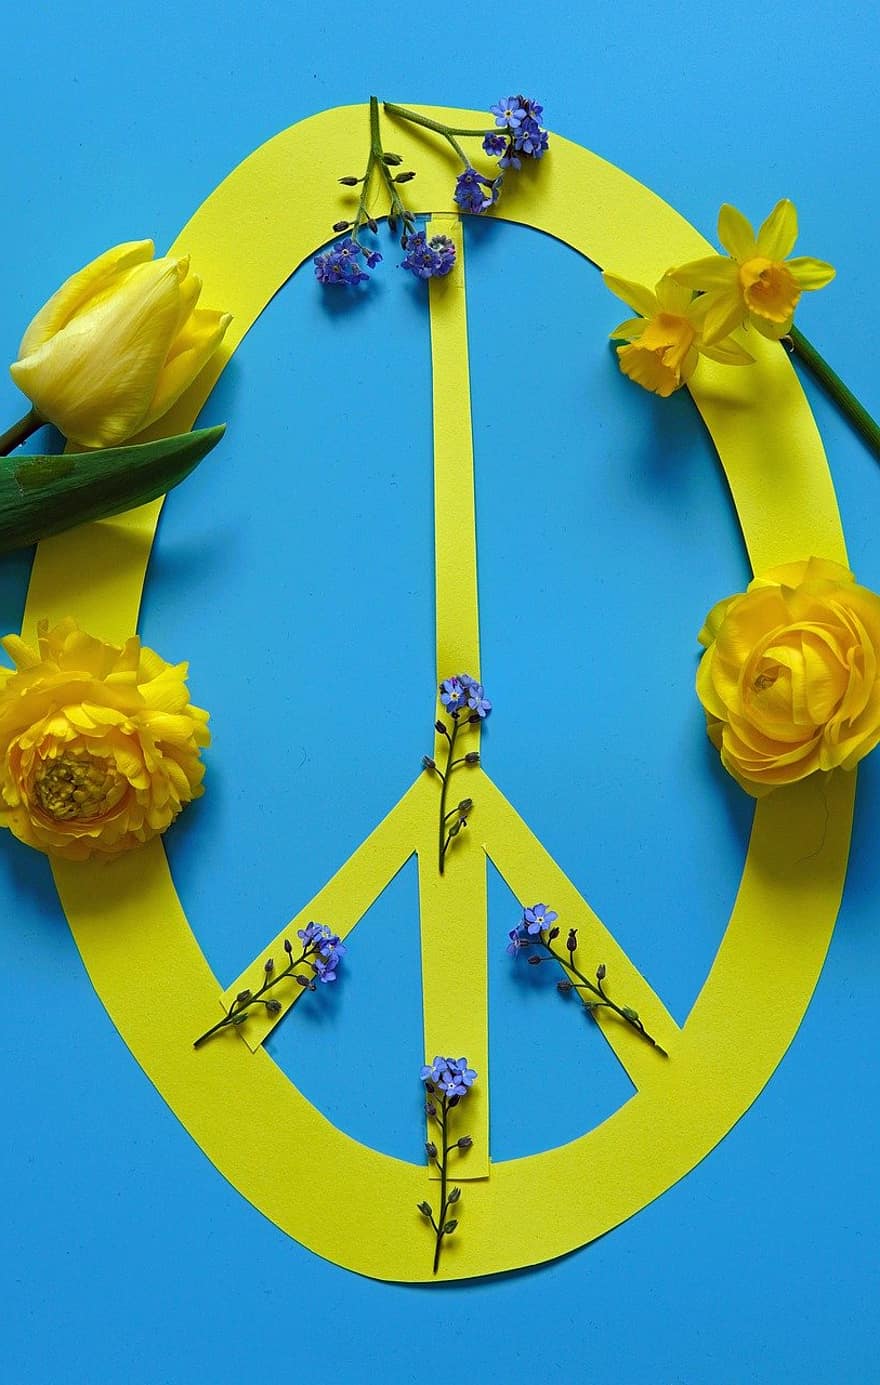 fred, Freds märke, Mot krig, ukraina, gul blå, Ukraina färger, symbol, Påsk 2022, Våren 2022, blomma, blommar